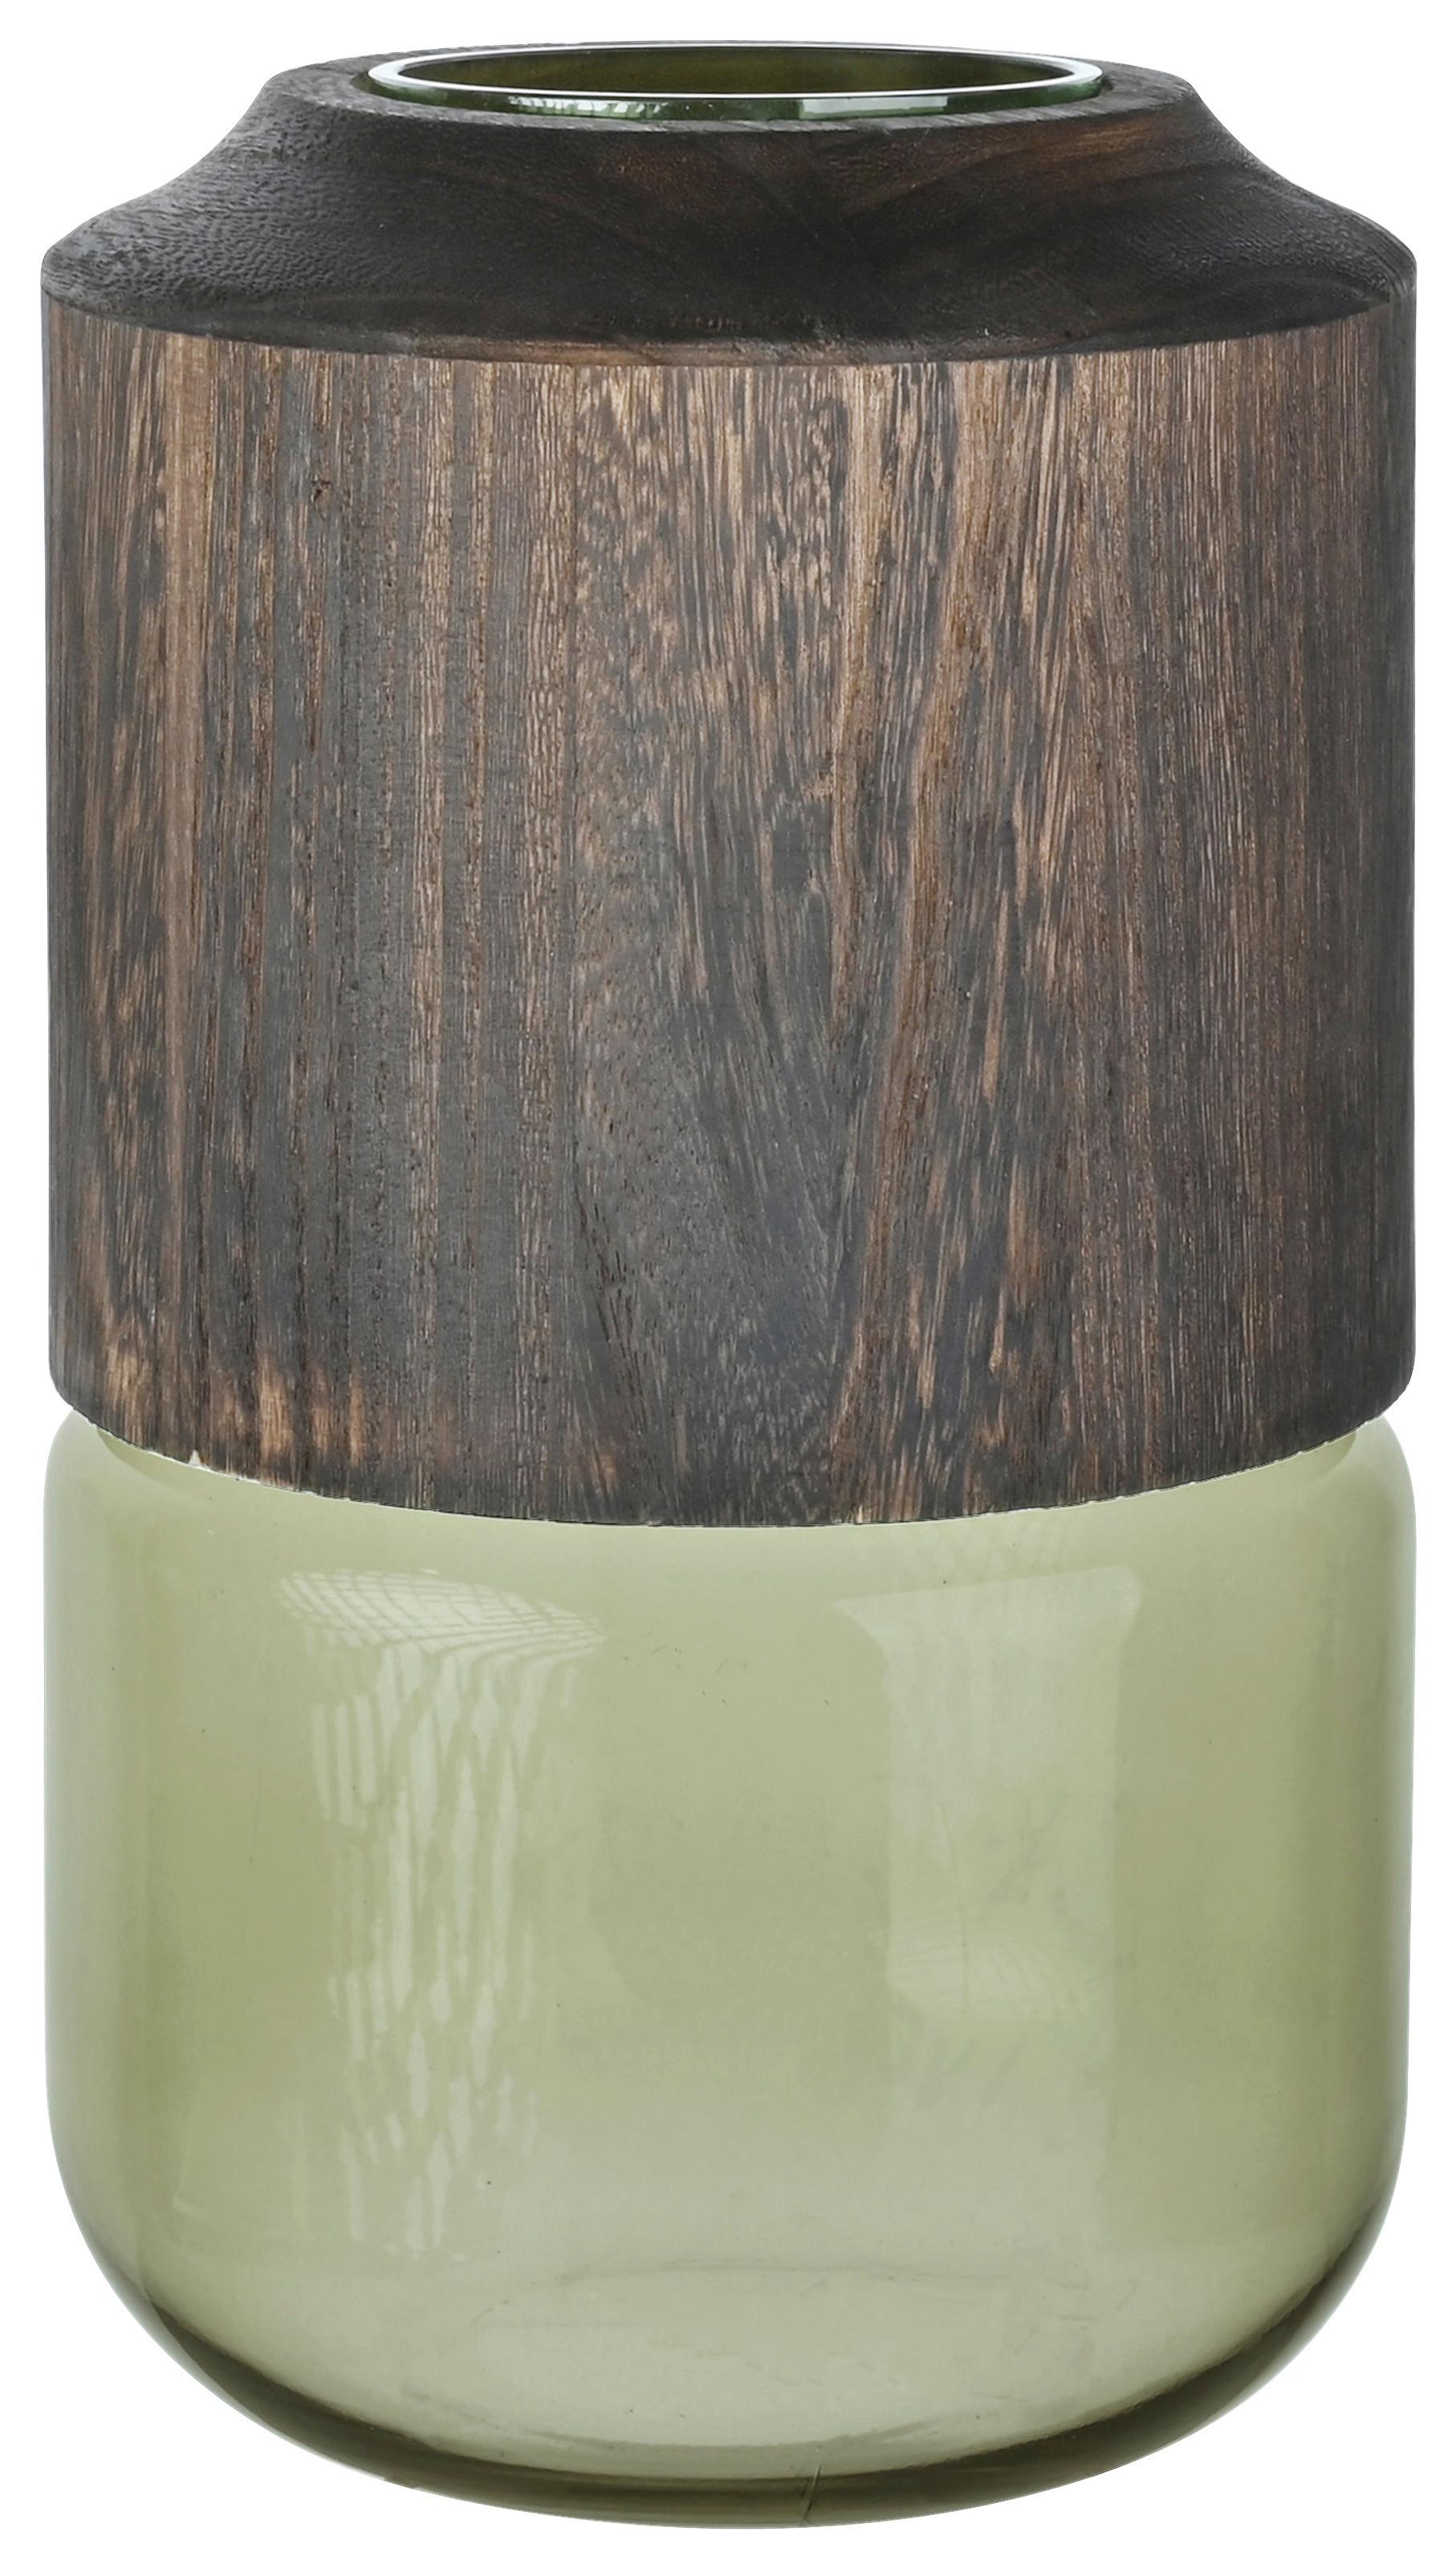 Váza Wood, Výška: 32cm - zelená/hnědá, dřevo/sklo (19/32cm) - Premium Living